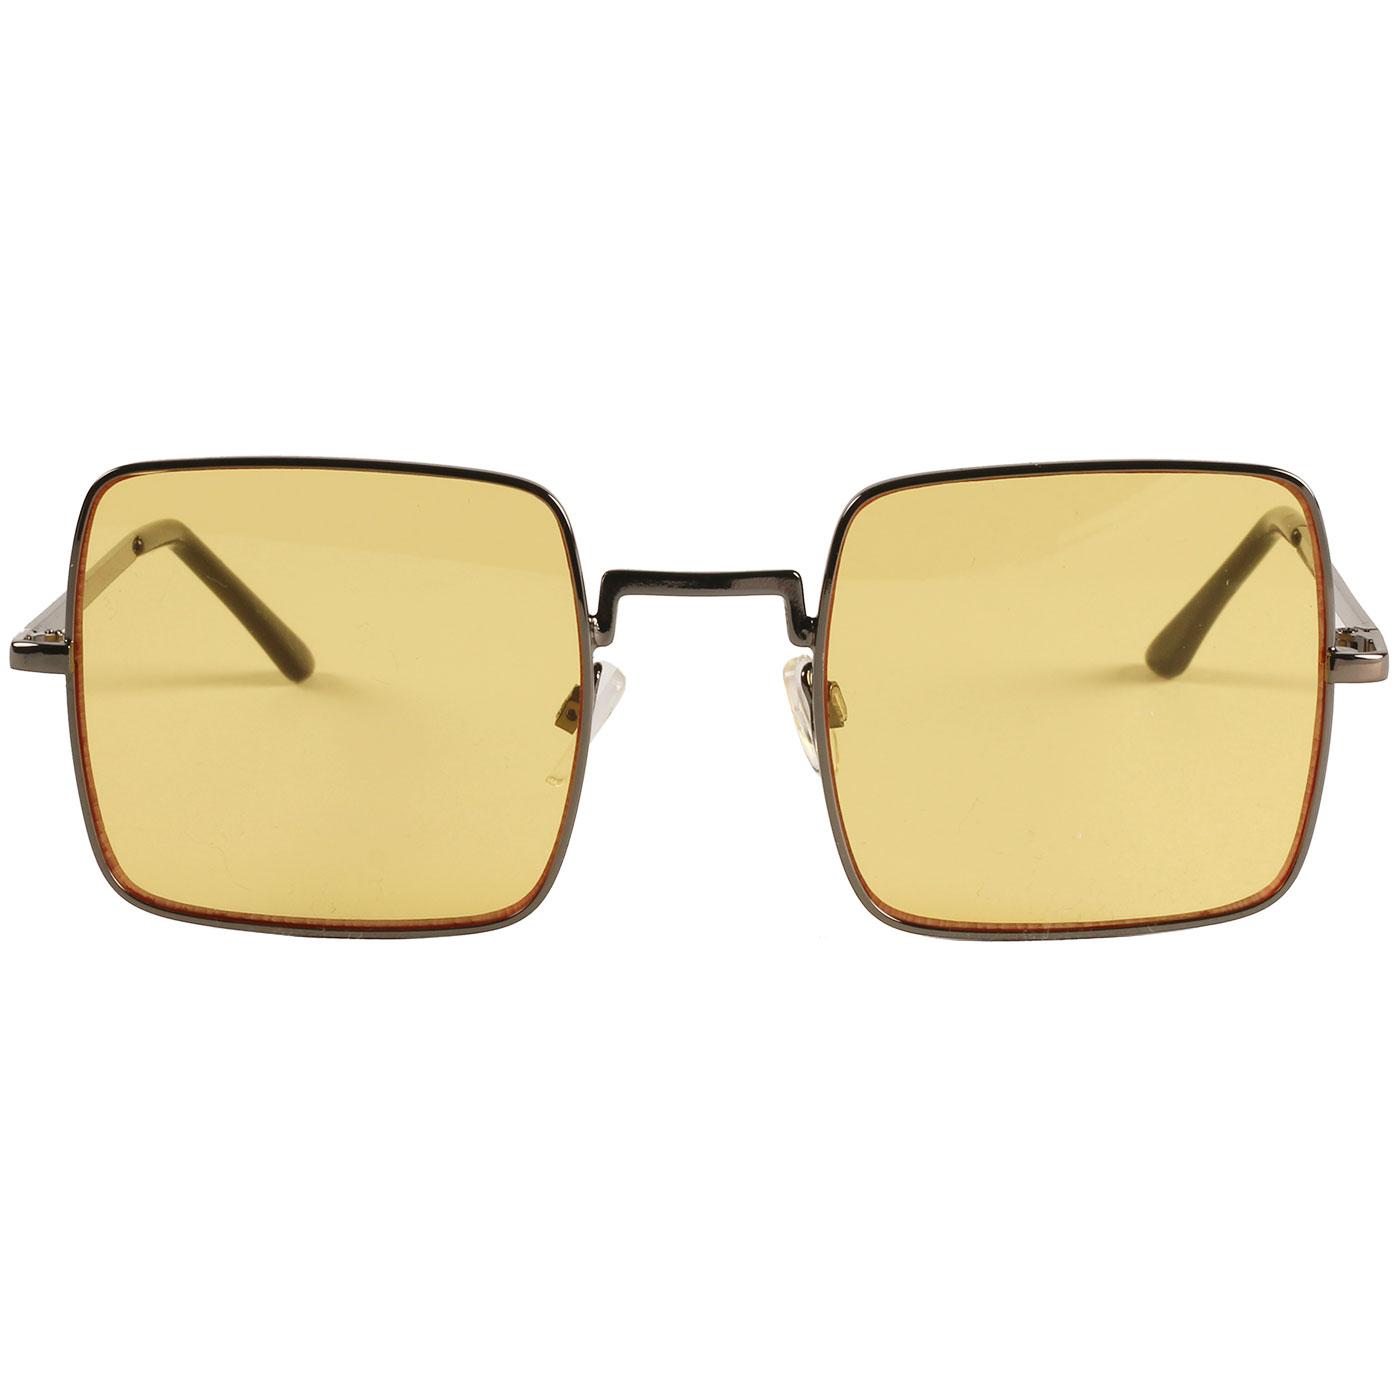 Harrison MADCAP ENGLAND 60s Square Sunglasses (Y)